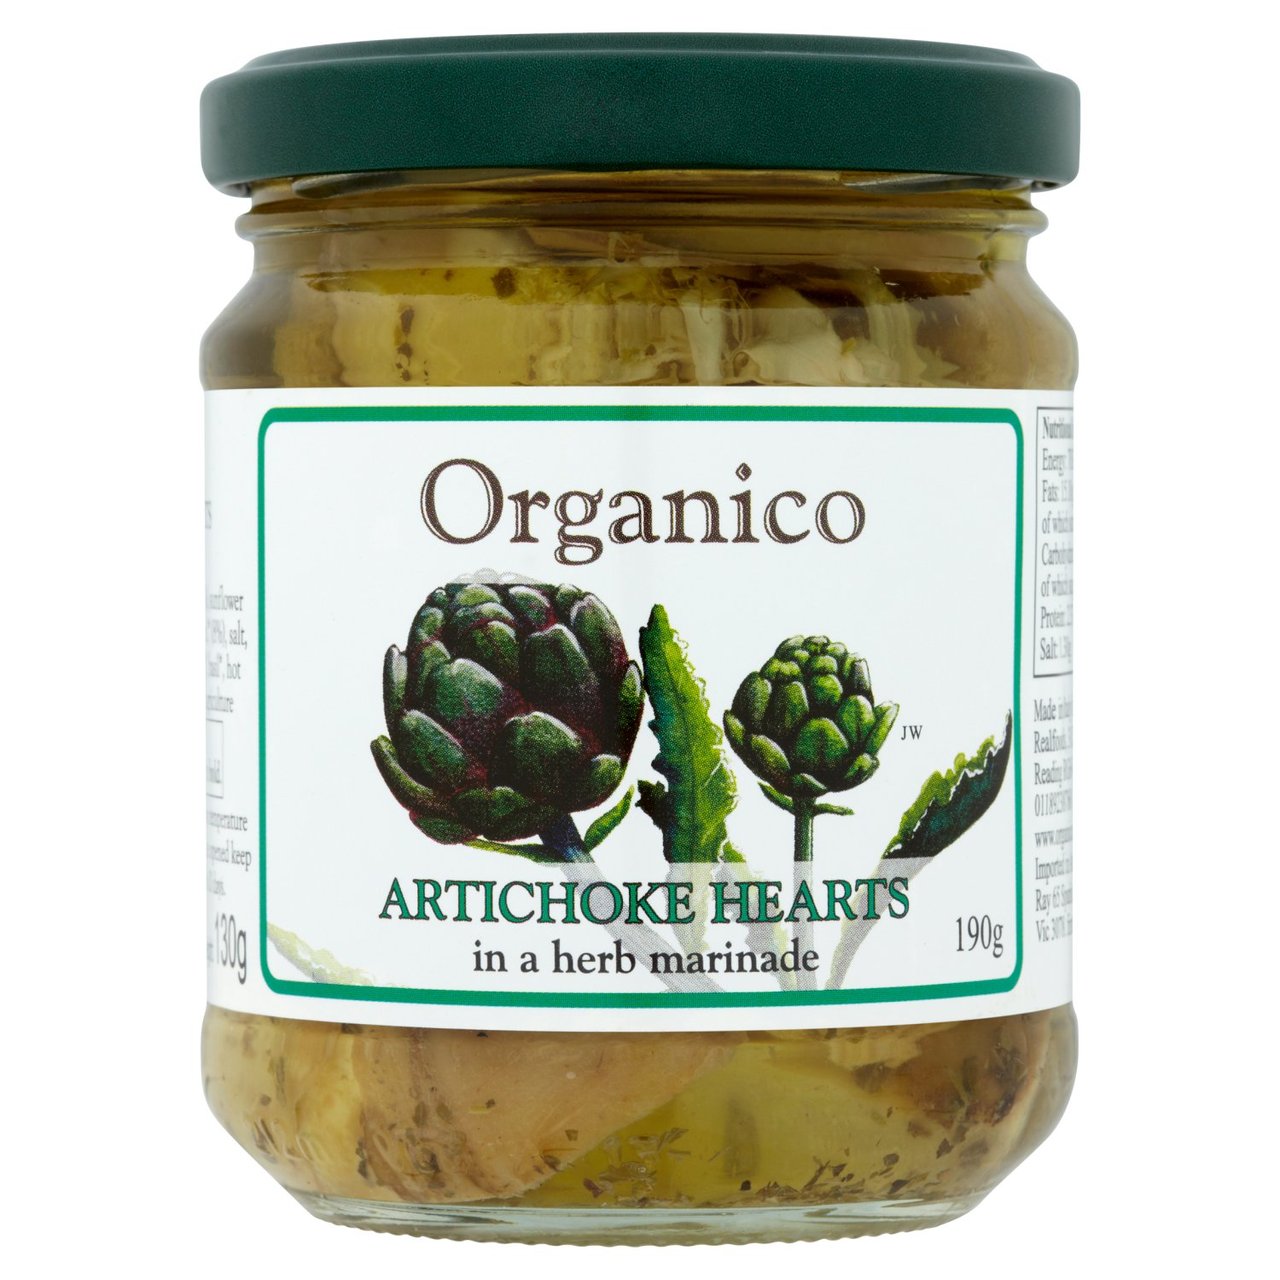 Artichoke Heart Halves Herb Marinade Organico Cert.Organic(190g)